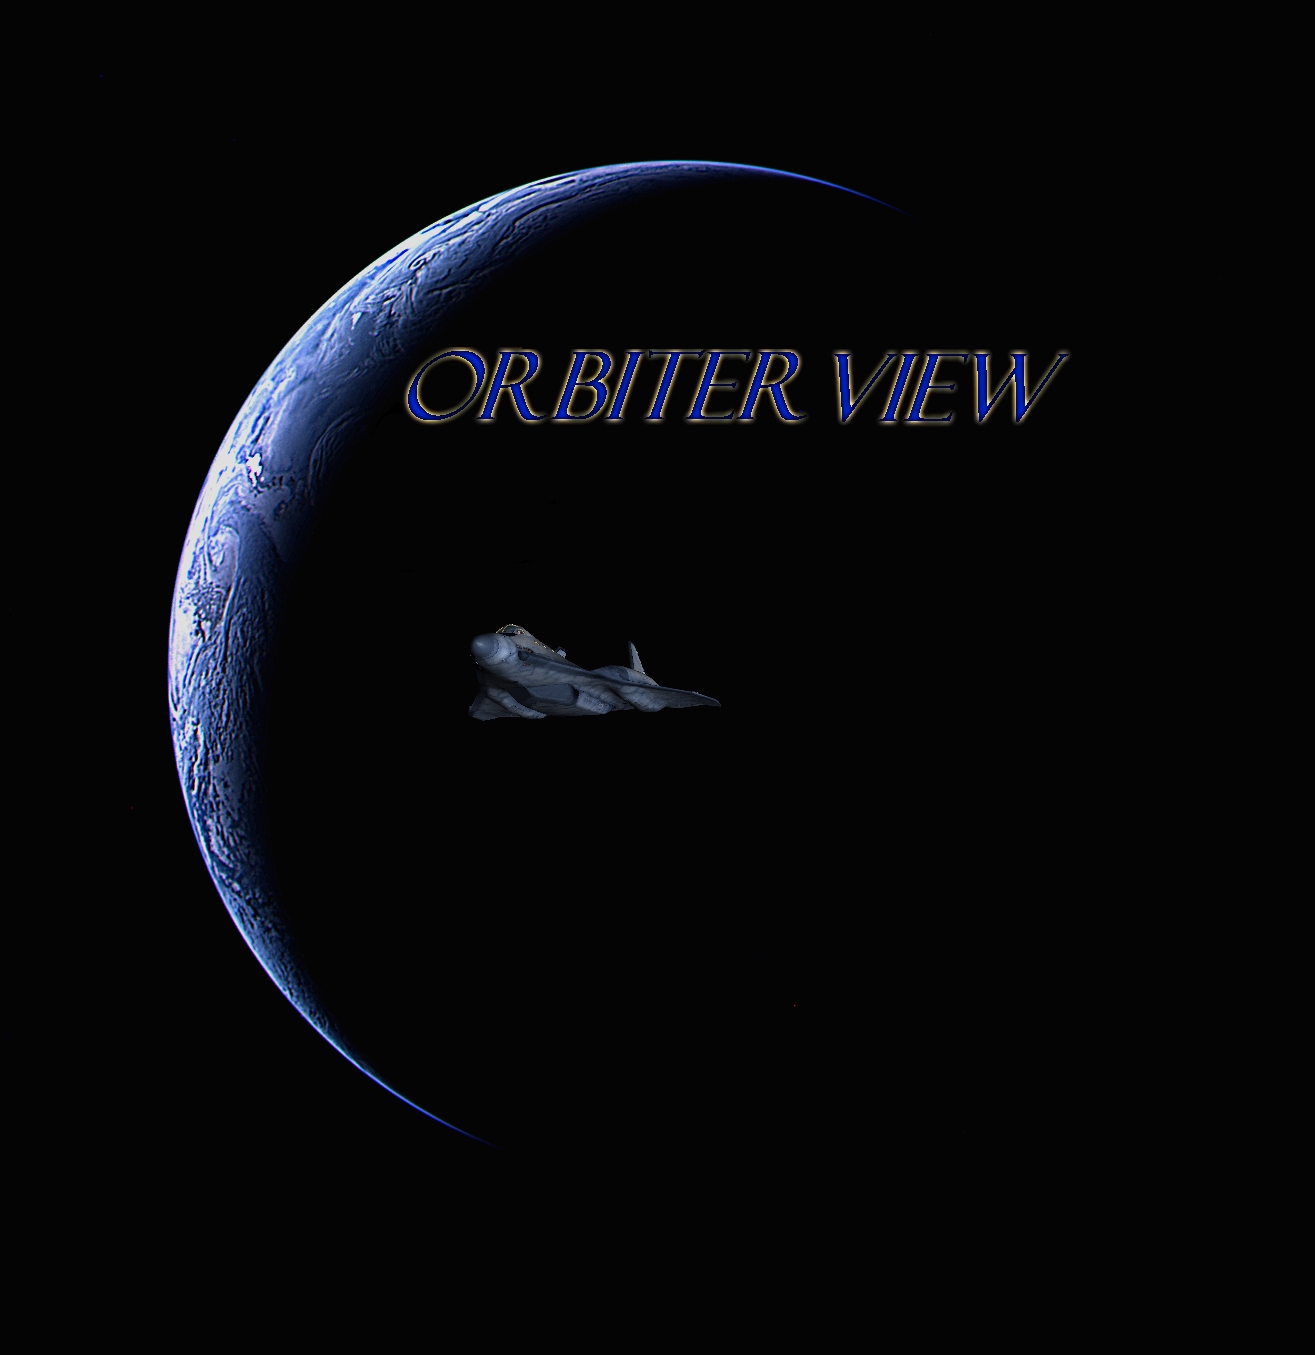 OrbiterviewRavenstarshadow.jpg